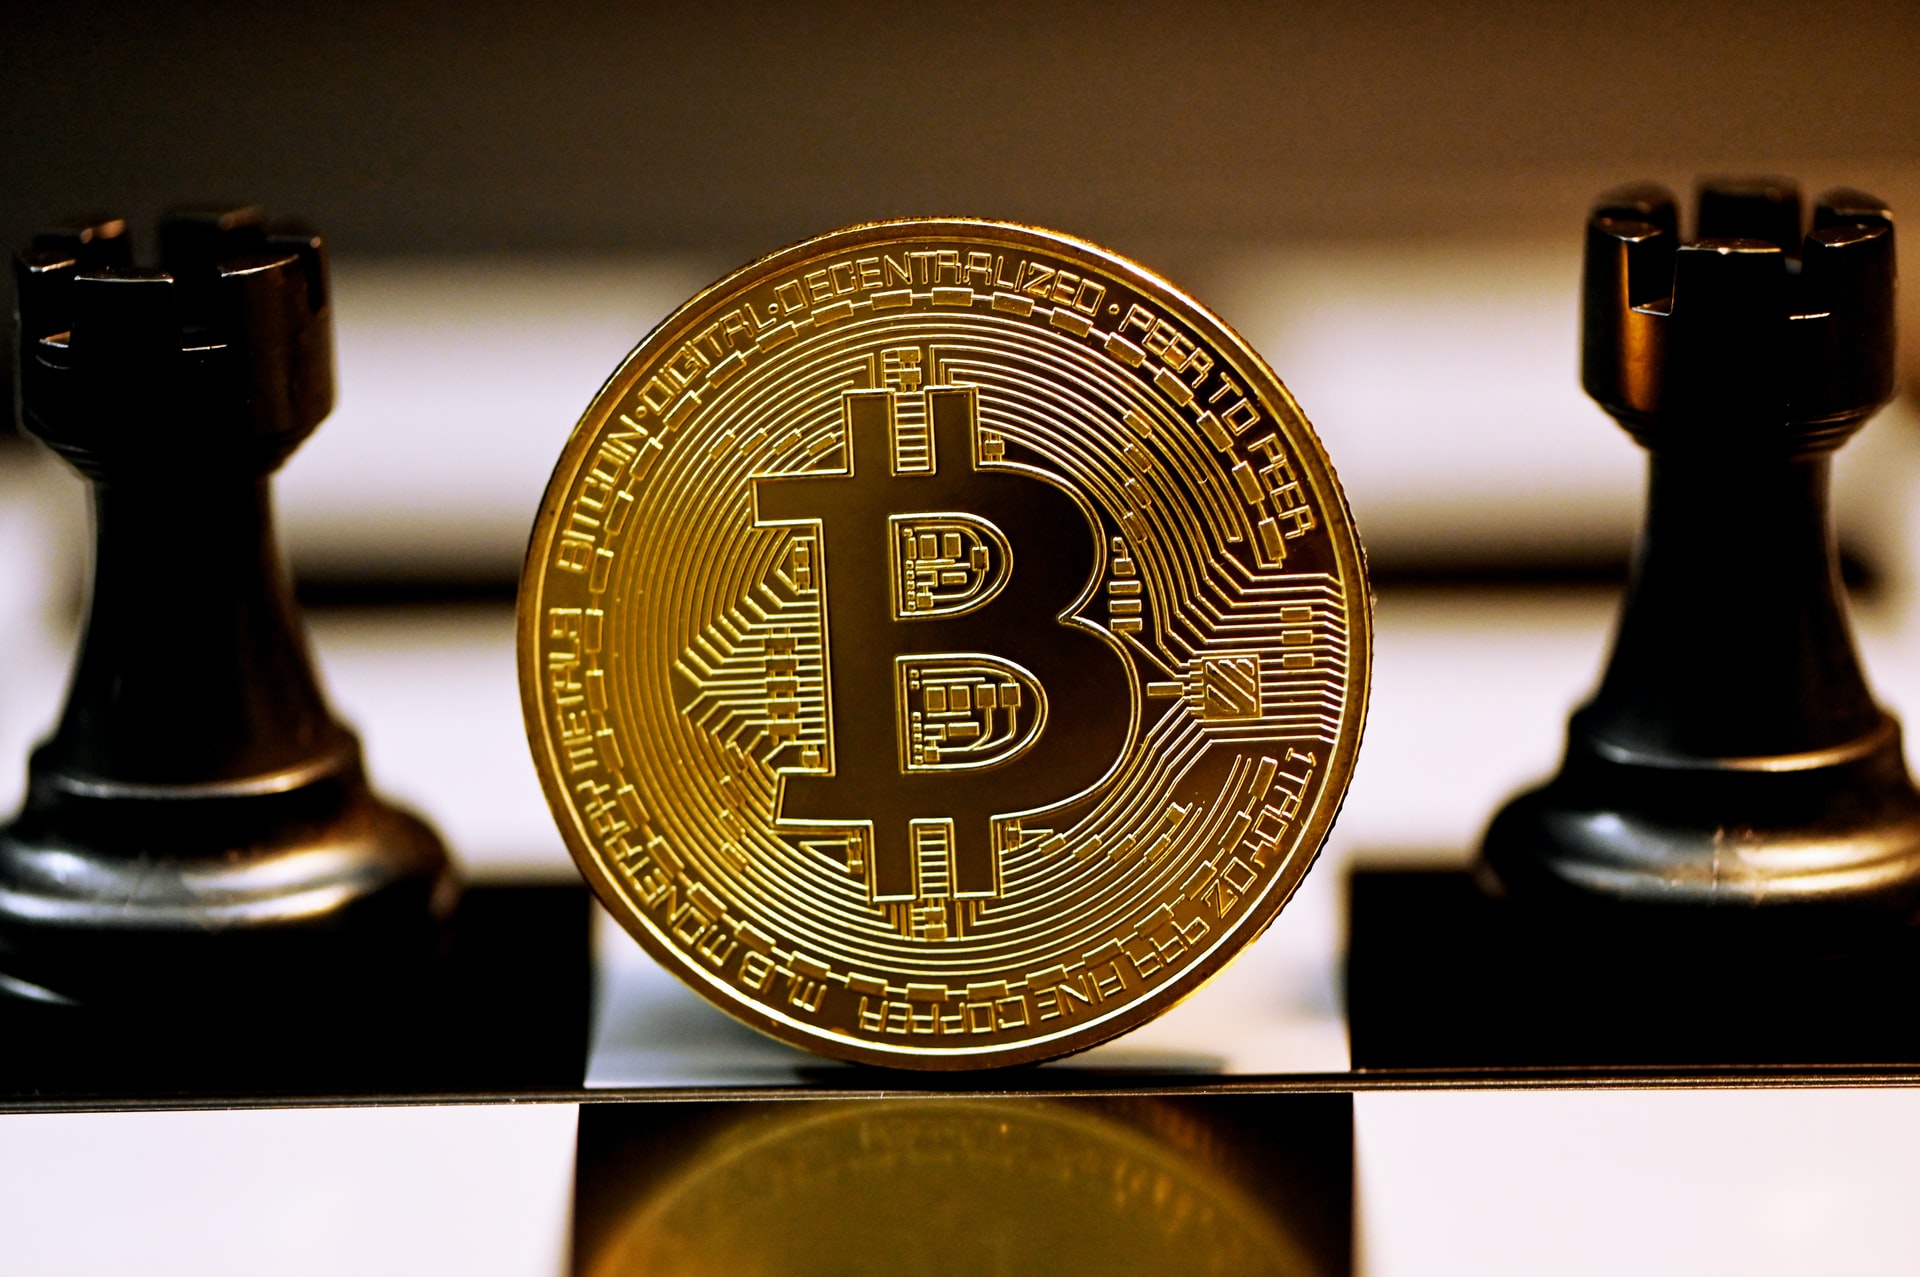 “Buy Bitcoin”: Robert Kiyosaki Foresees A New Depression